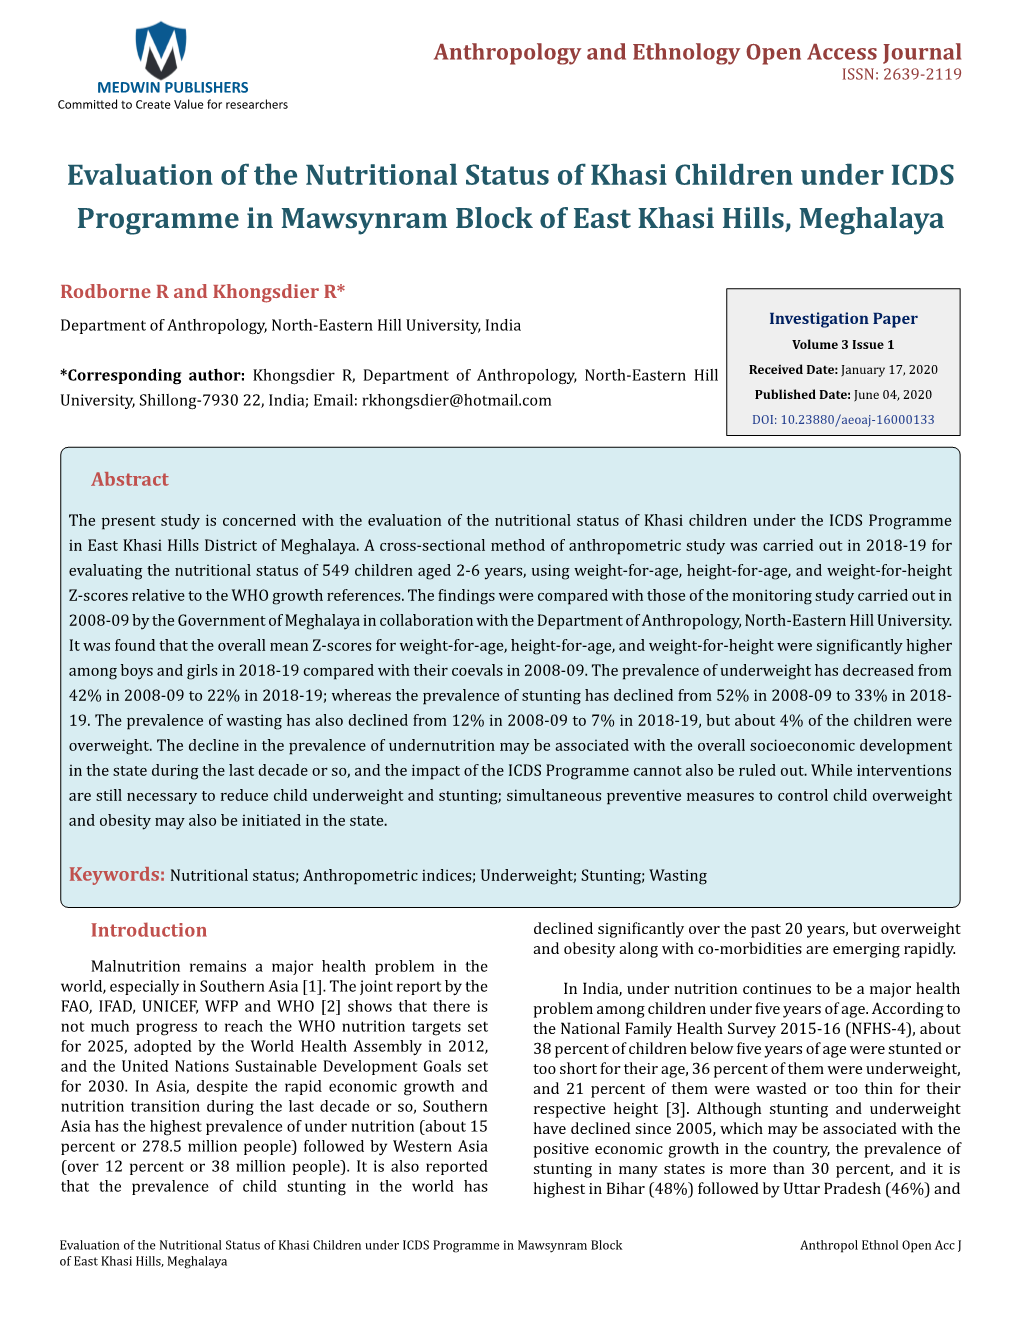 Evaluation of the Nutritional Status of Khasi Children Under ICDS Programme in Mawsynram Block of East Khasi Hills, Meghalaya